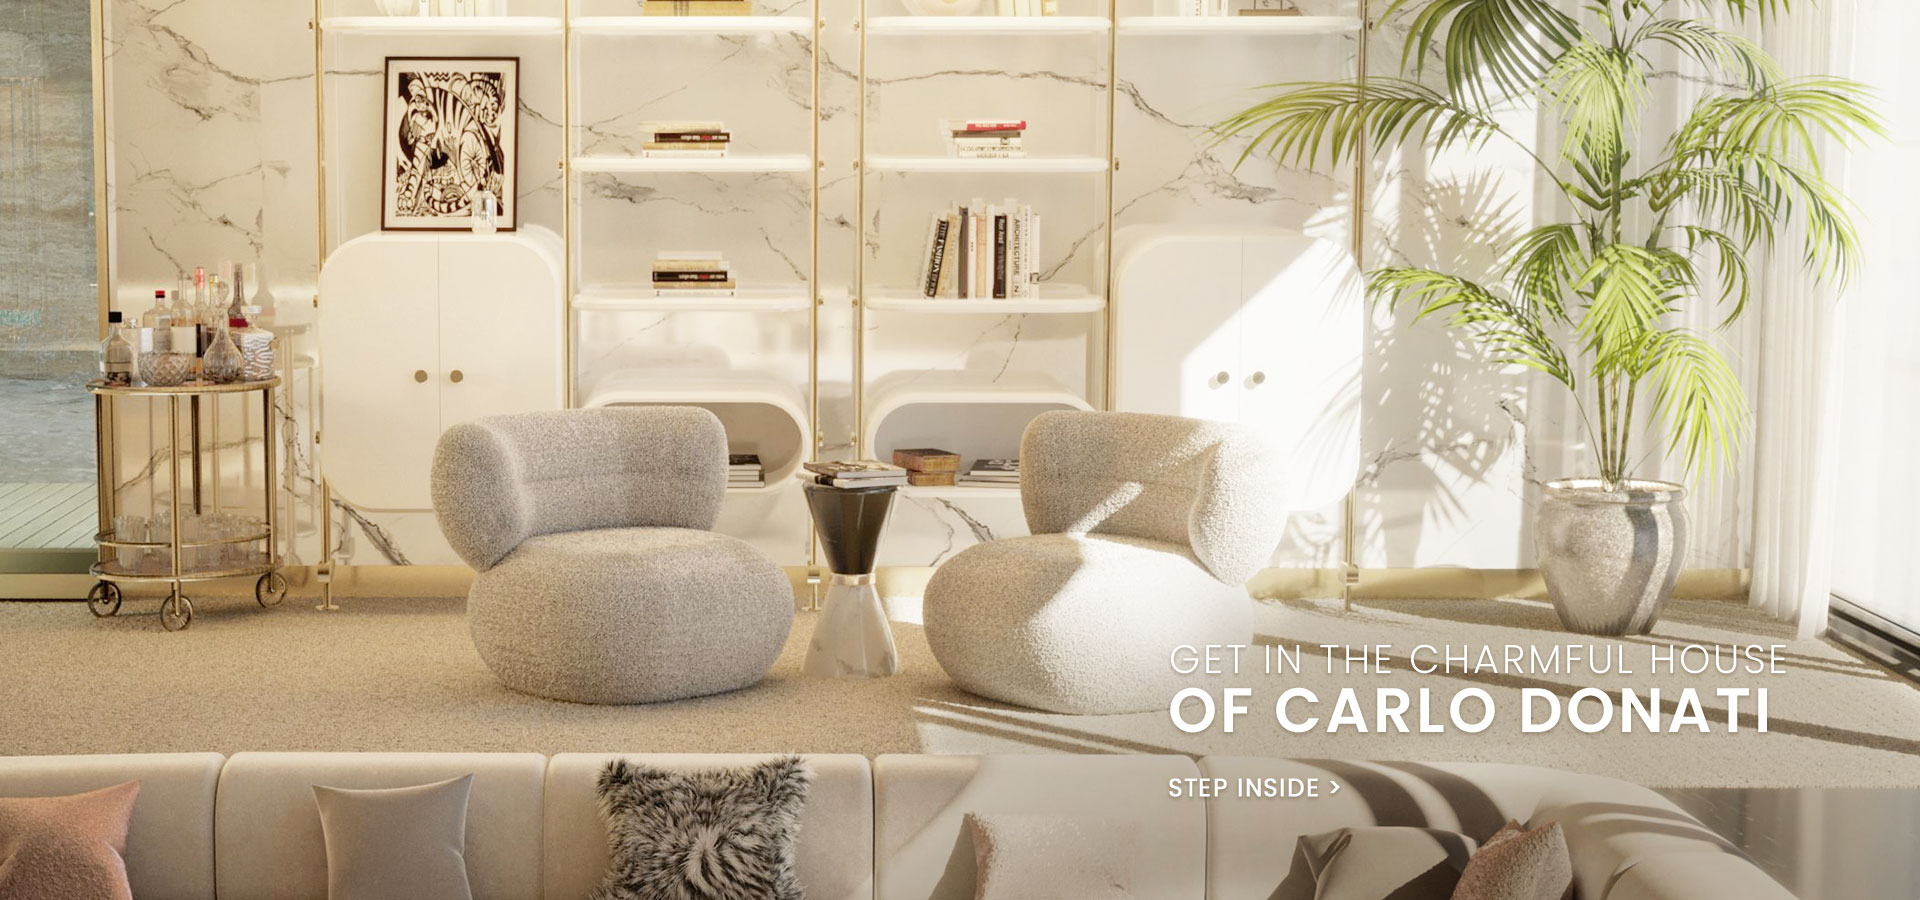 carlodonatihousevt luxury furniture brands Top 10 Exclusive Luxury Furniture Brands saint tropez carlo donati home